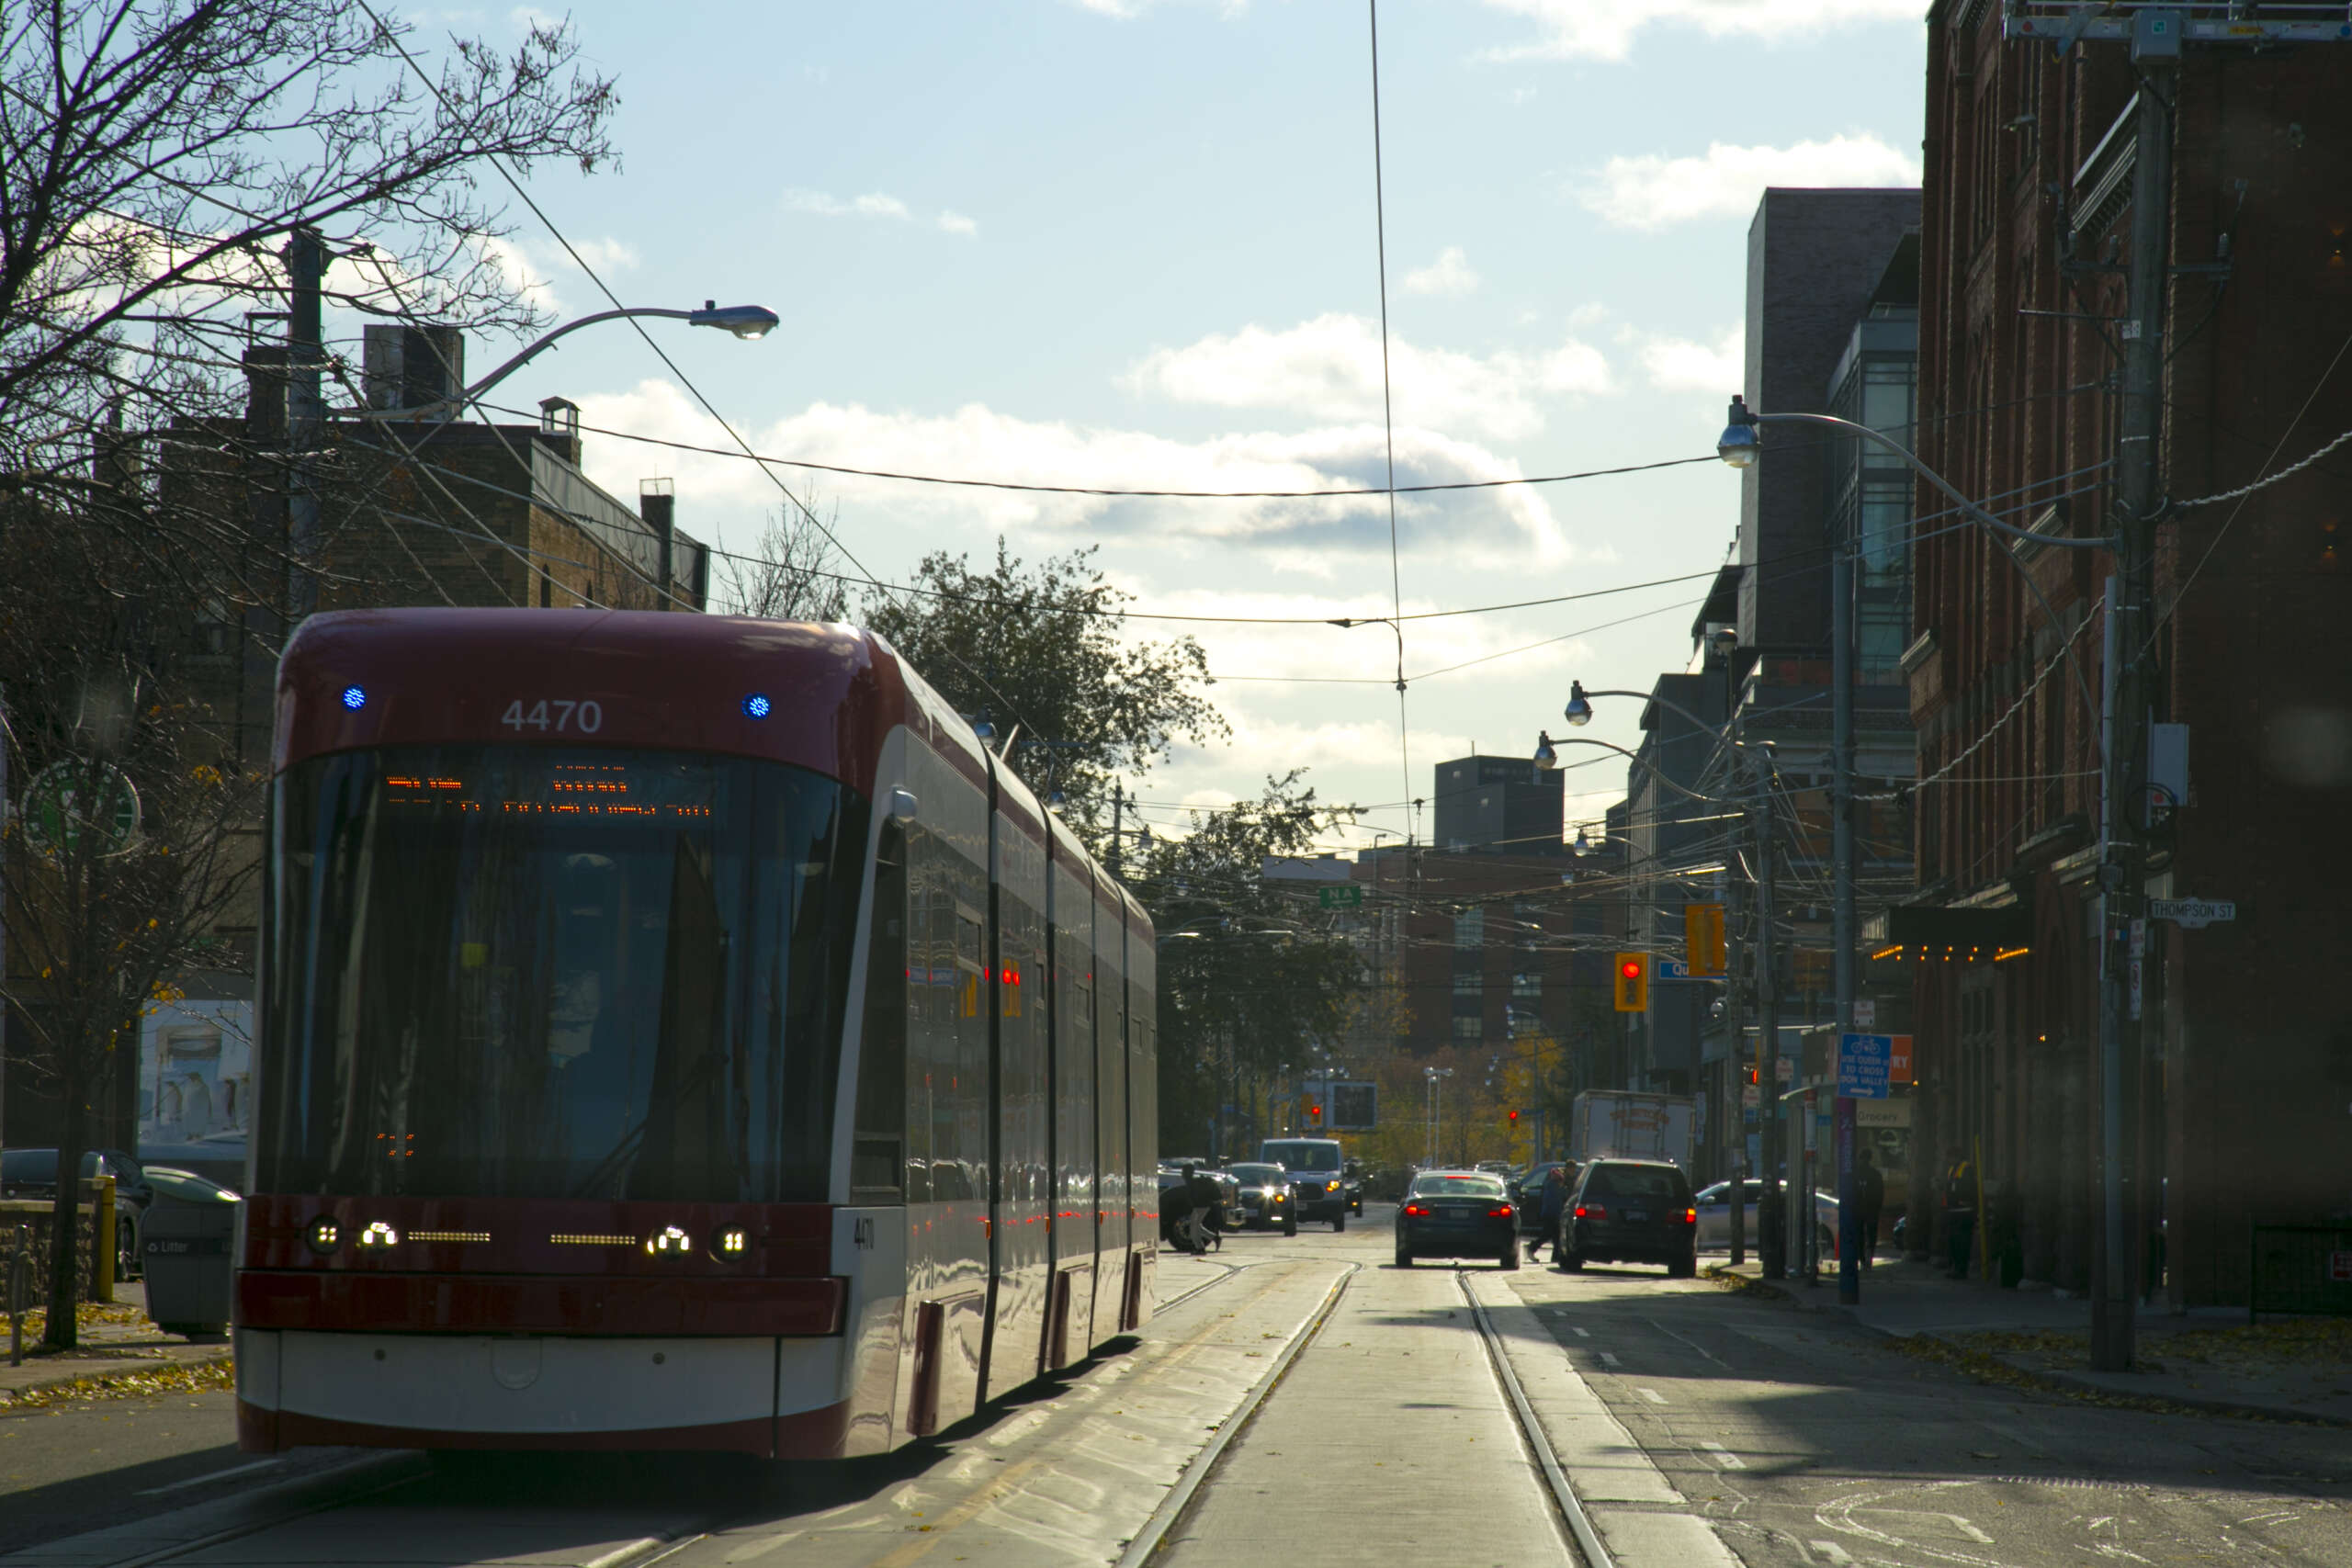 Toronto streetcar, public transportation.